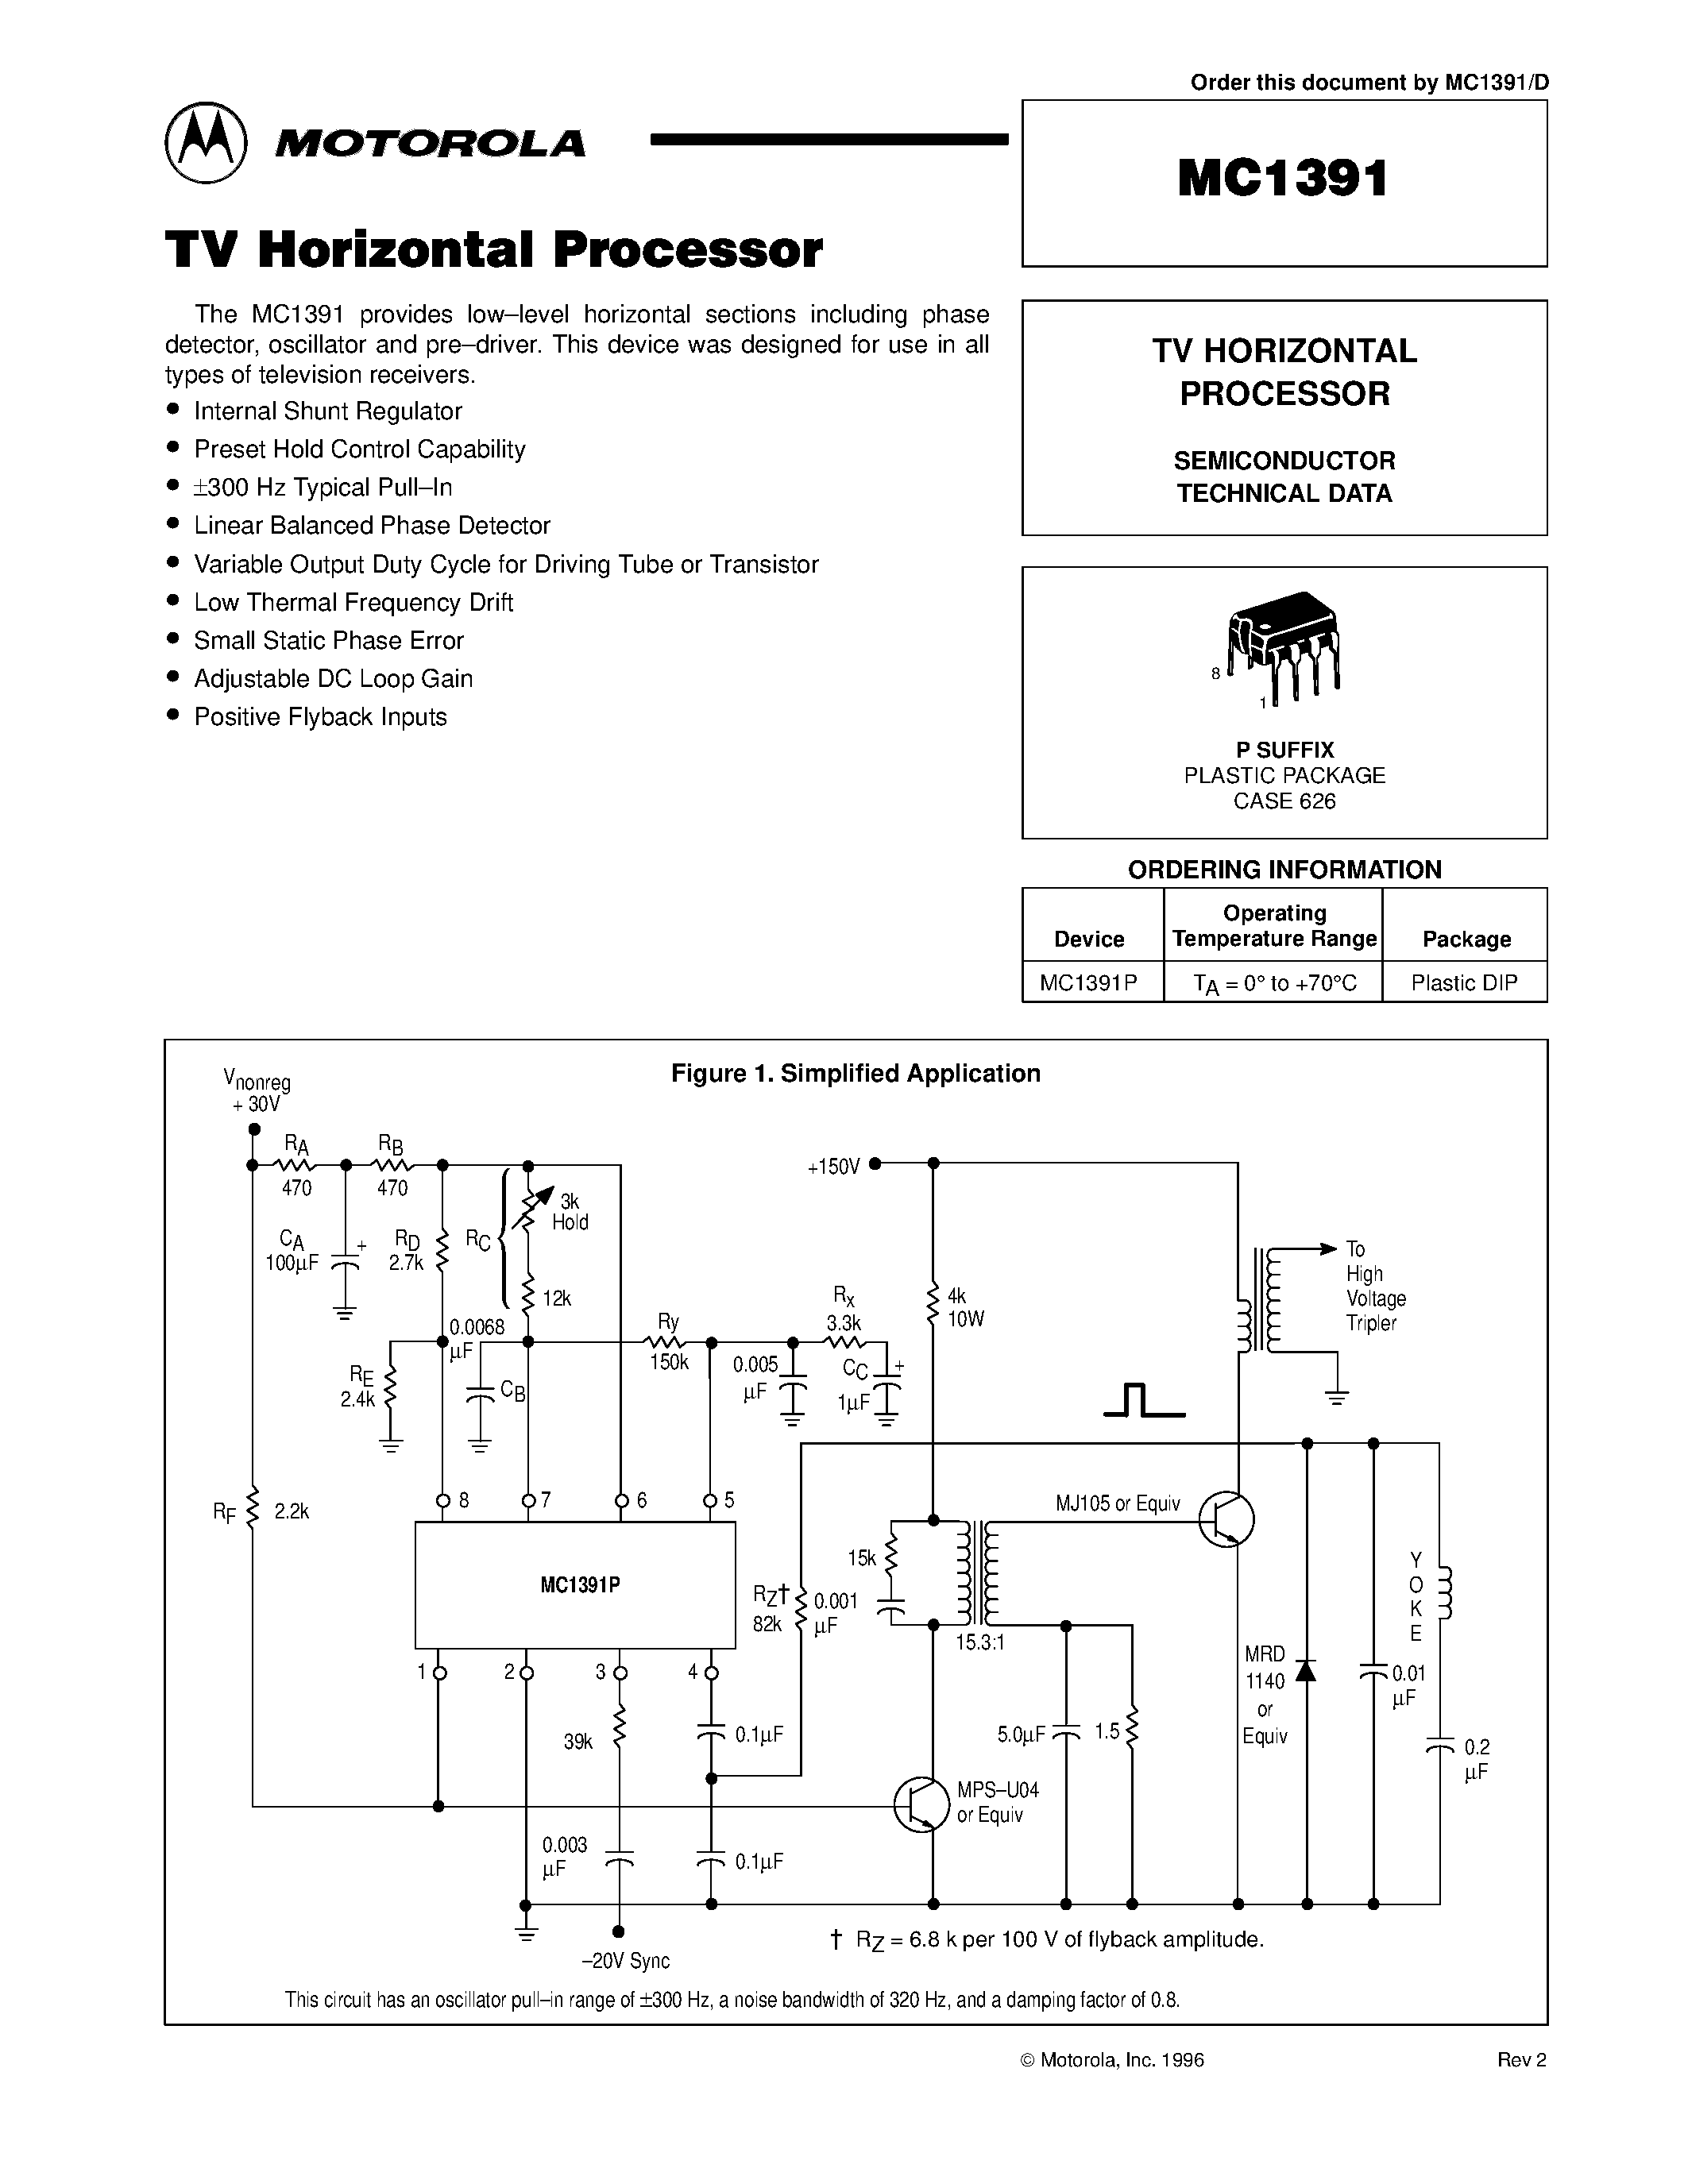 Datasheet MC1391 - TV HORIZONTAL PROCESSOR page 1